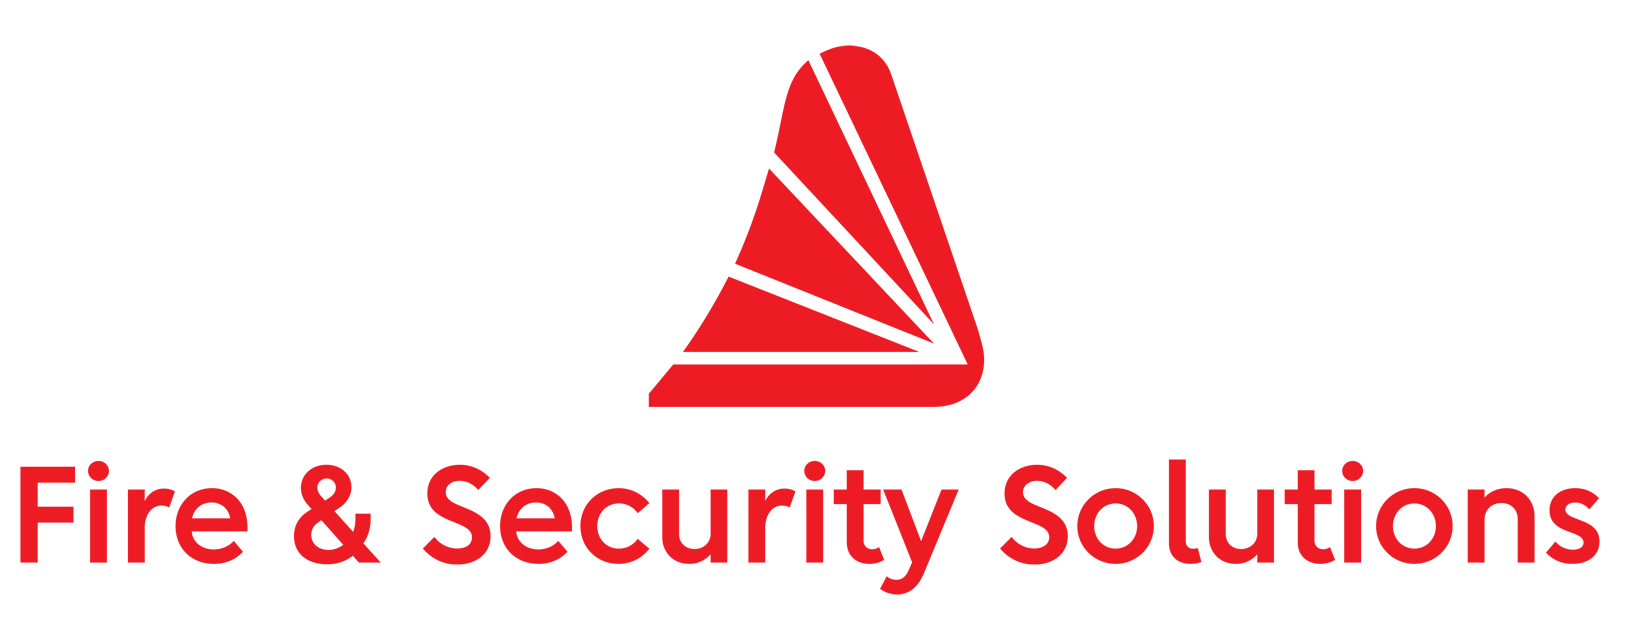 nfass-logo-red-transparent.png